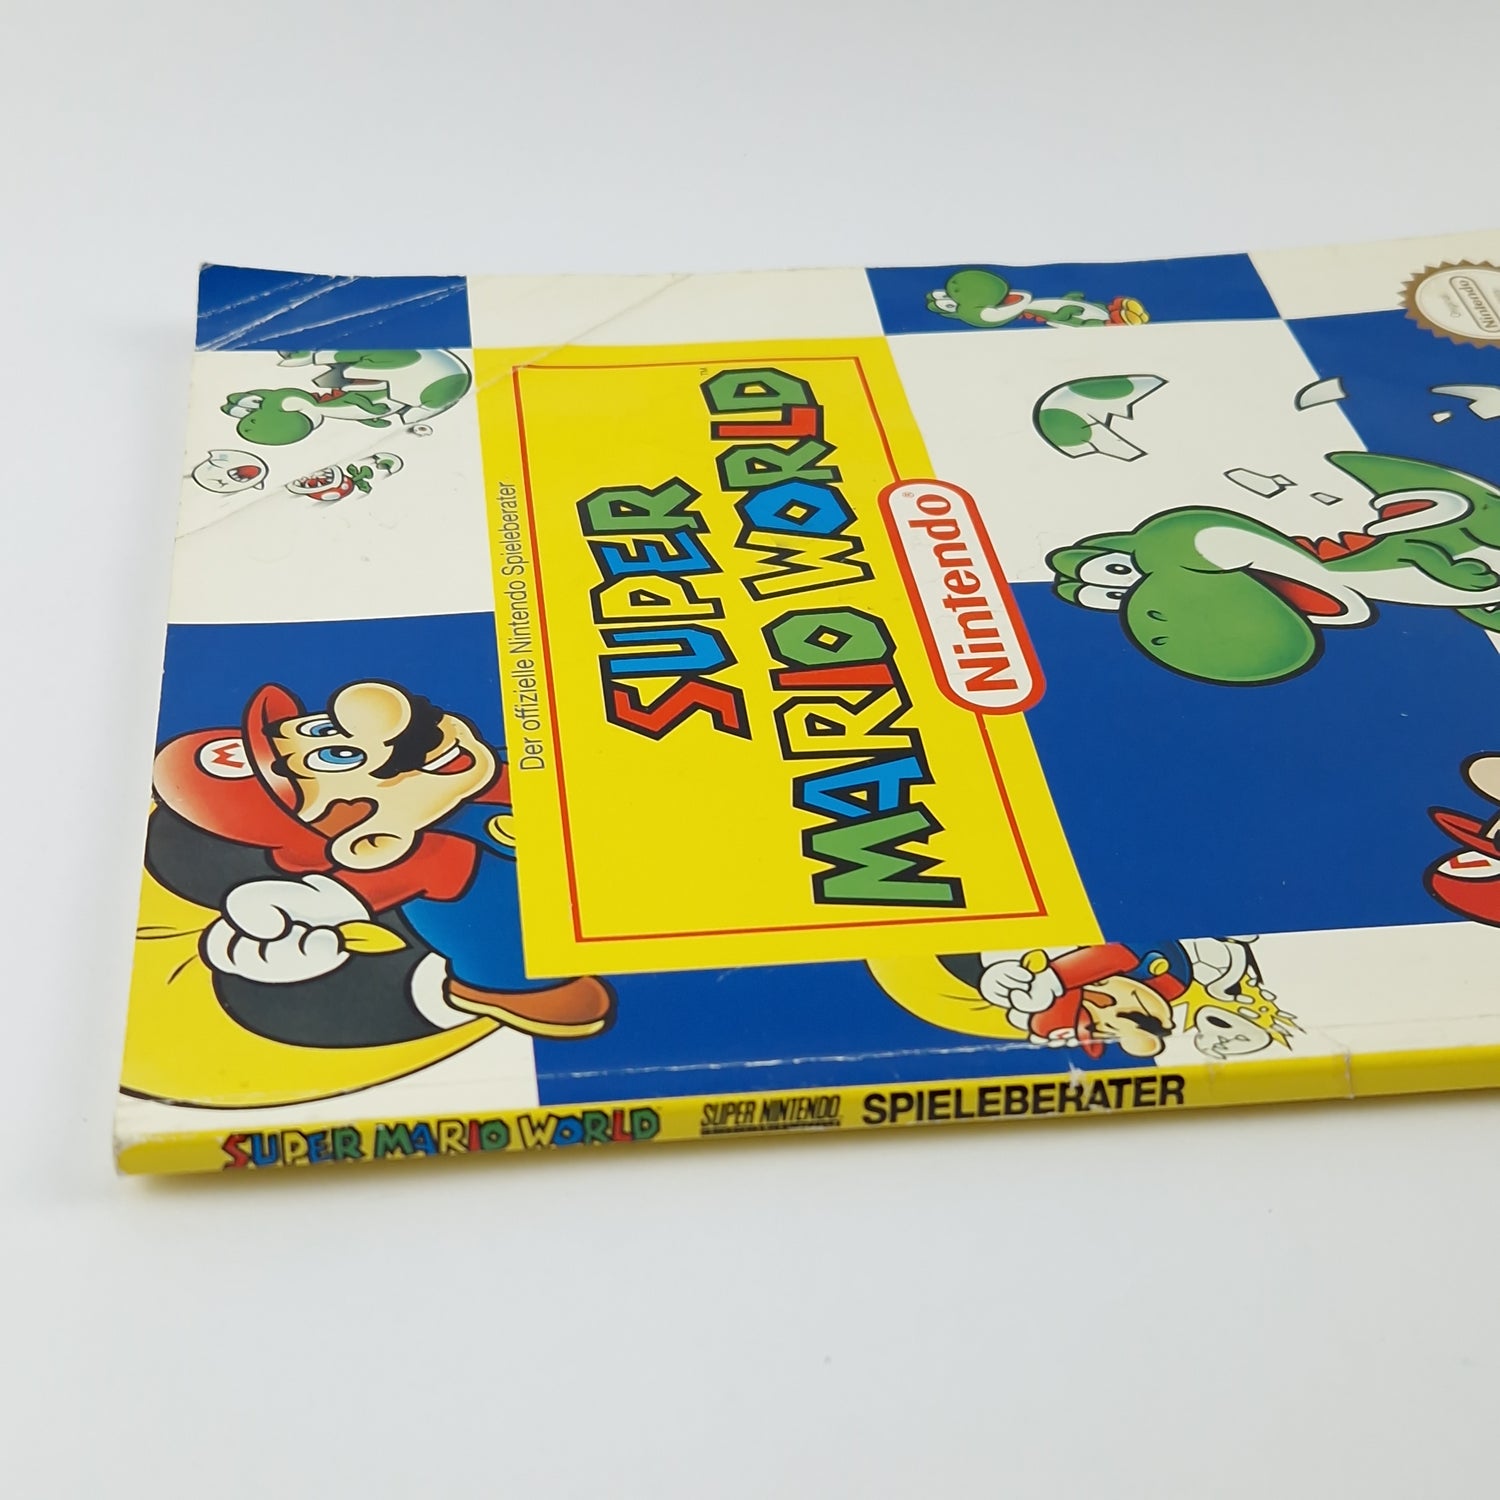 Super Nintendo Spieleberater : Super Mario World - SNES Guide Lösungsbuch Book